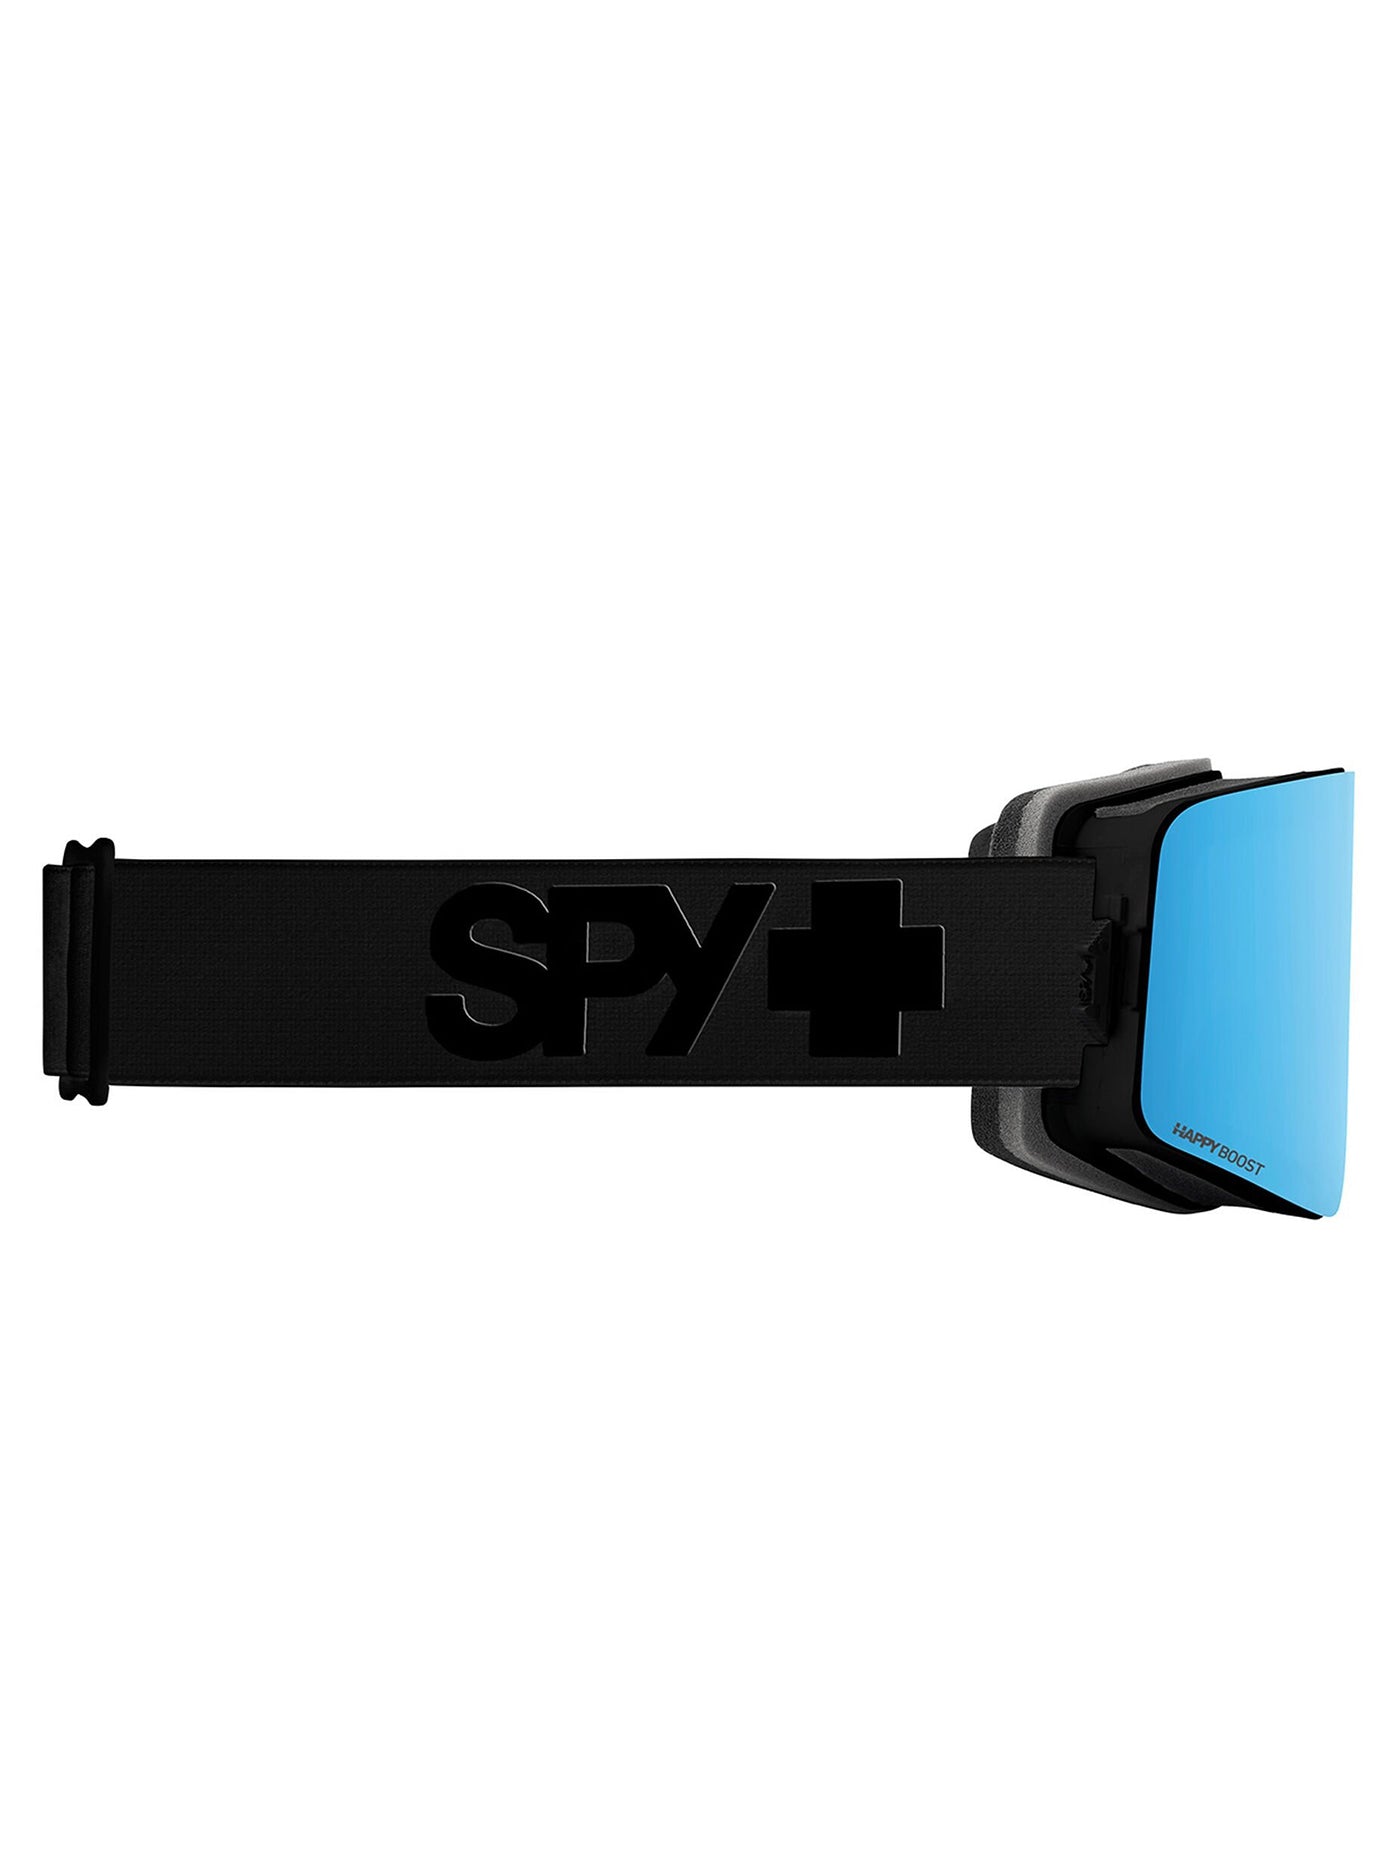 Spy Marauder Black/Ice Blue Mirror Snowboard Goggle 2024